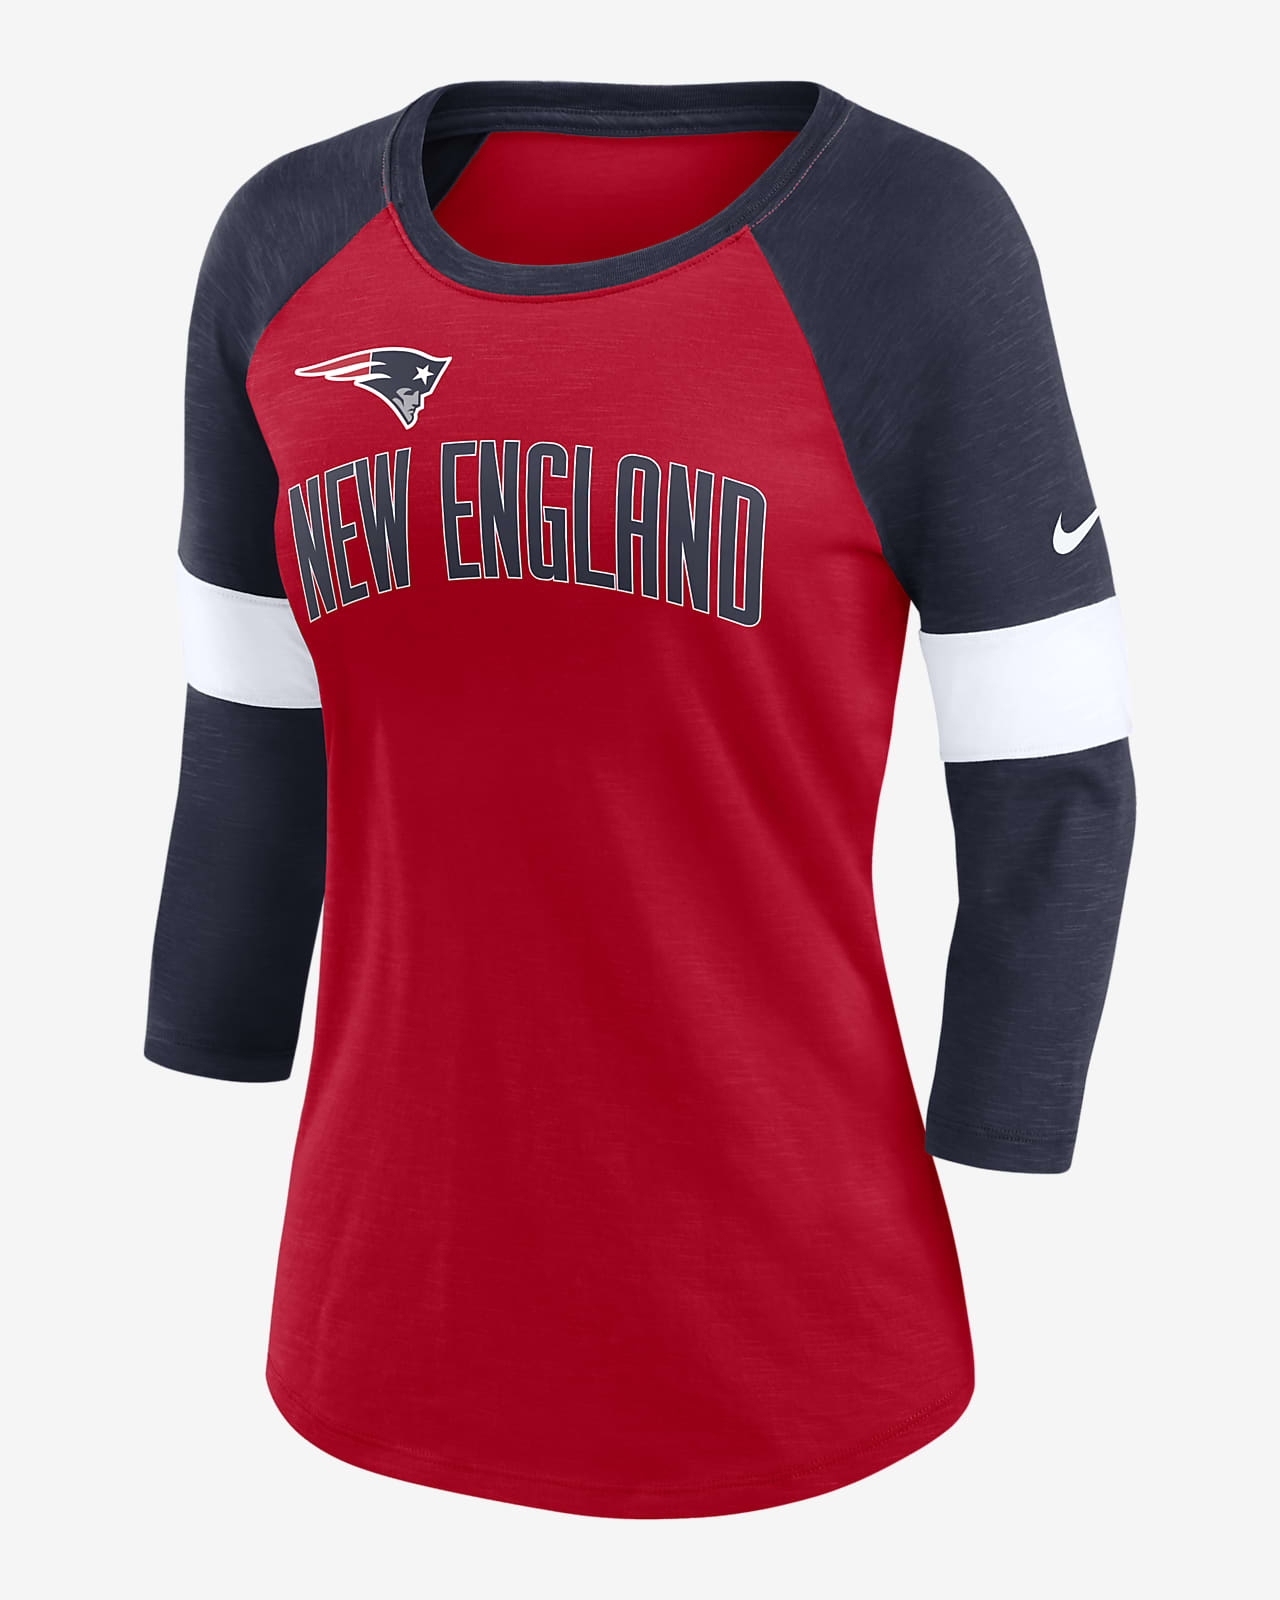 Nike, Tops, Nike Orioles Womens 34 Sleeve Raglan Tshirt